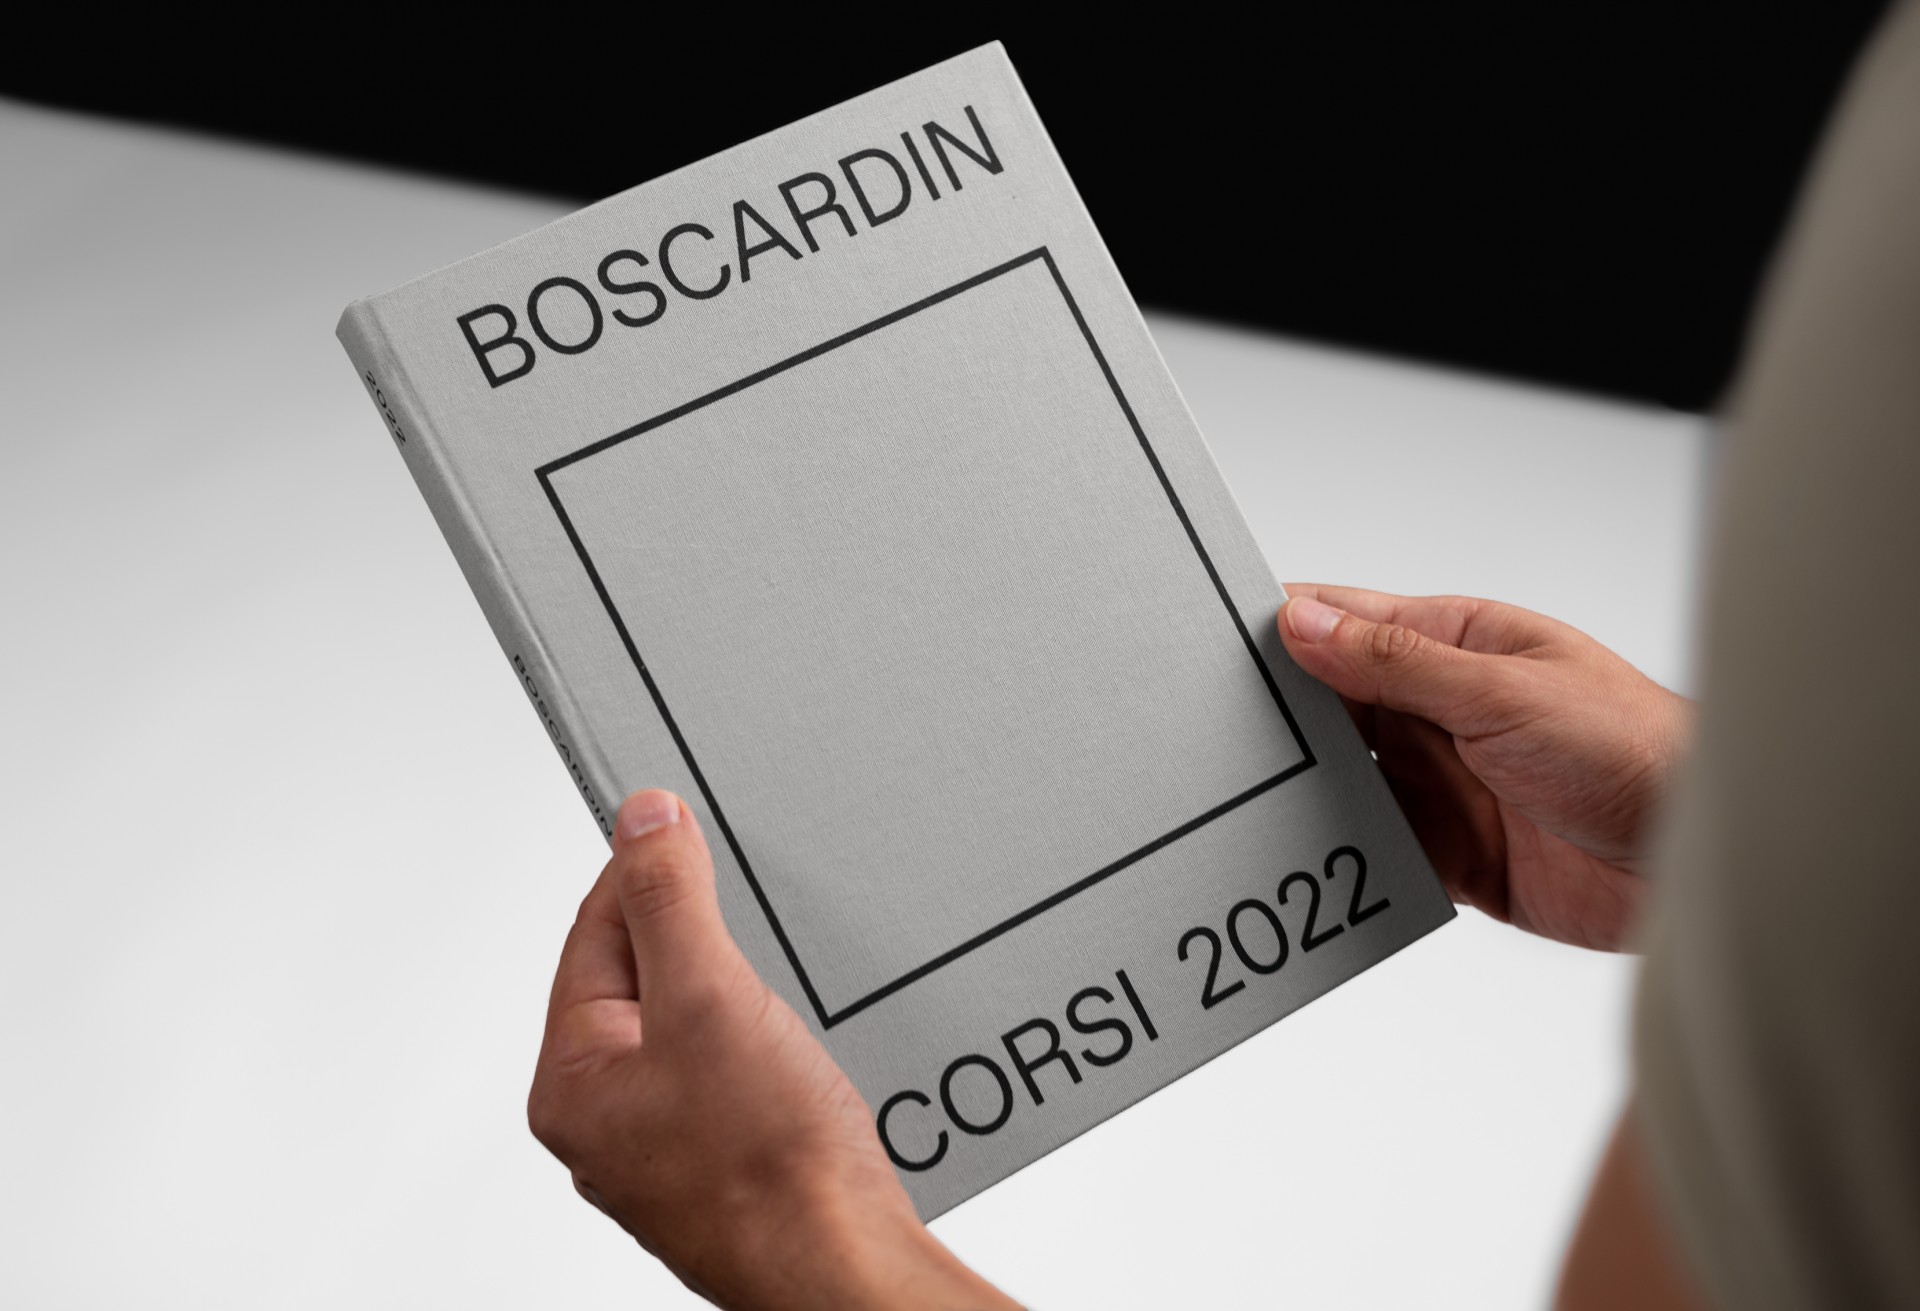 Livro Boscardin Corsi